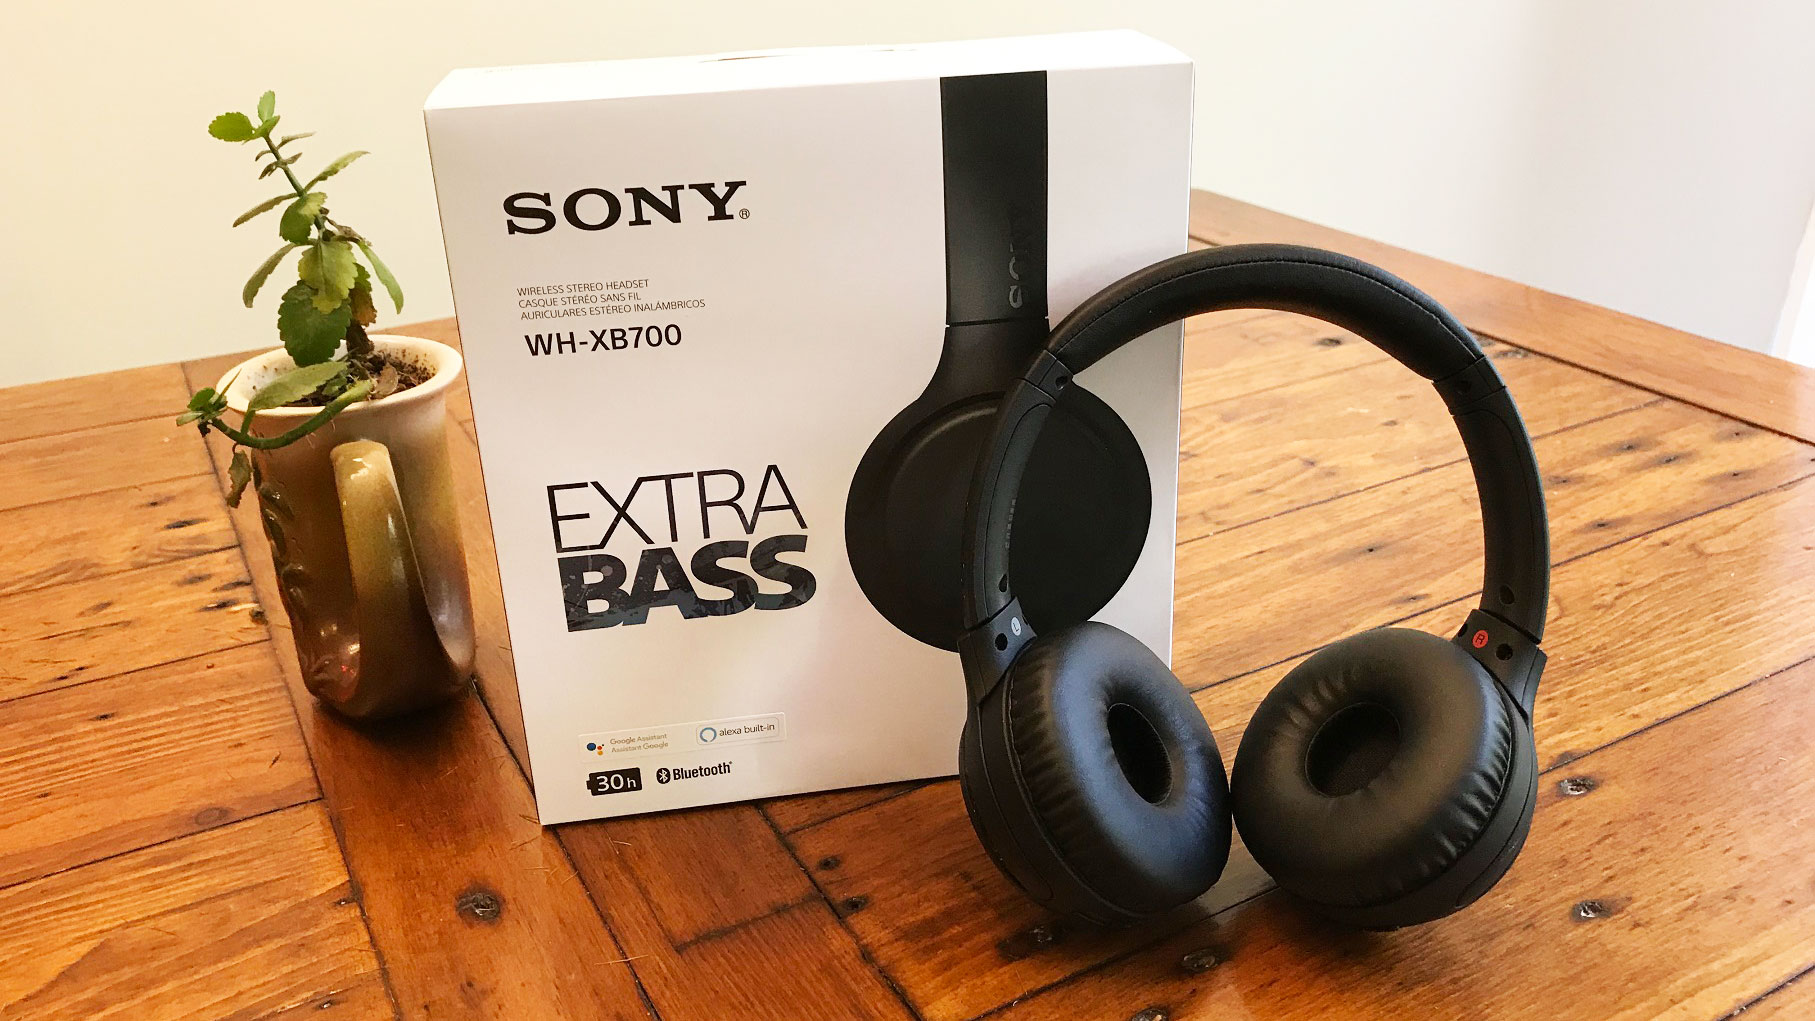 Sony EXTRA BASS WH-XB700 Wireless Headphones